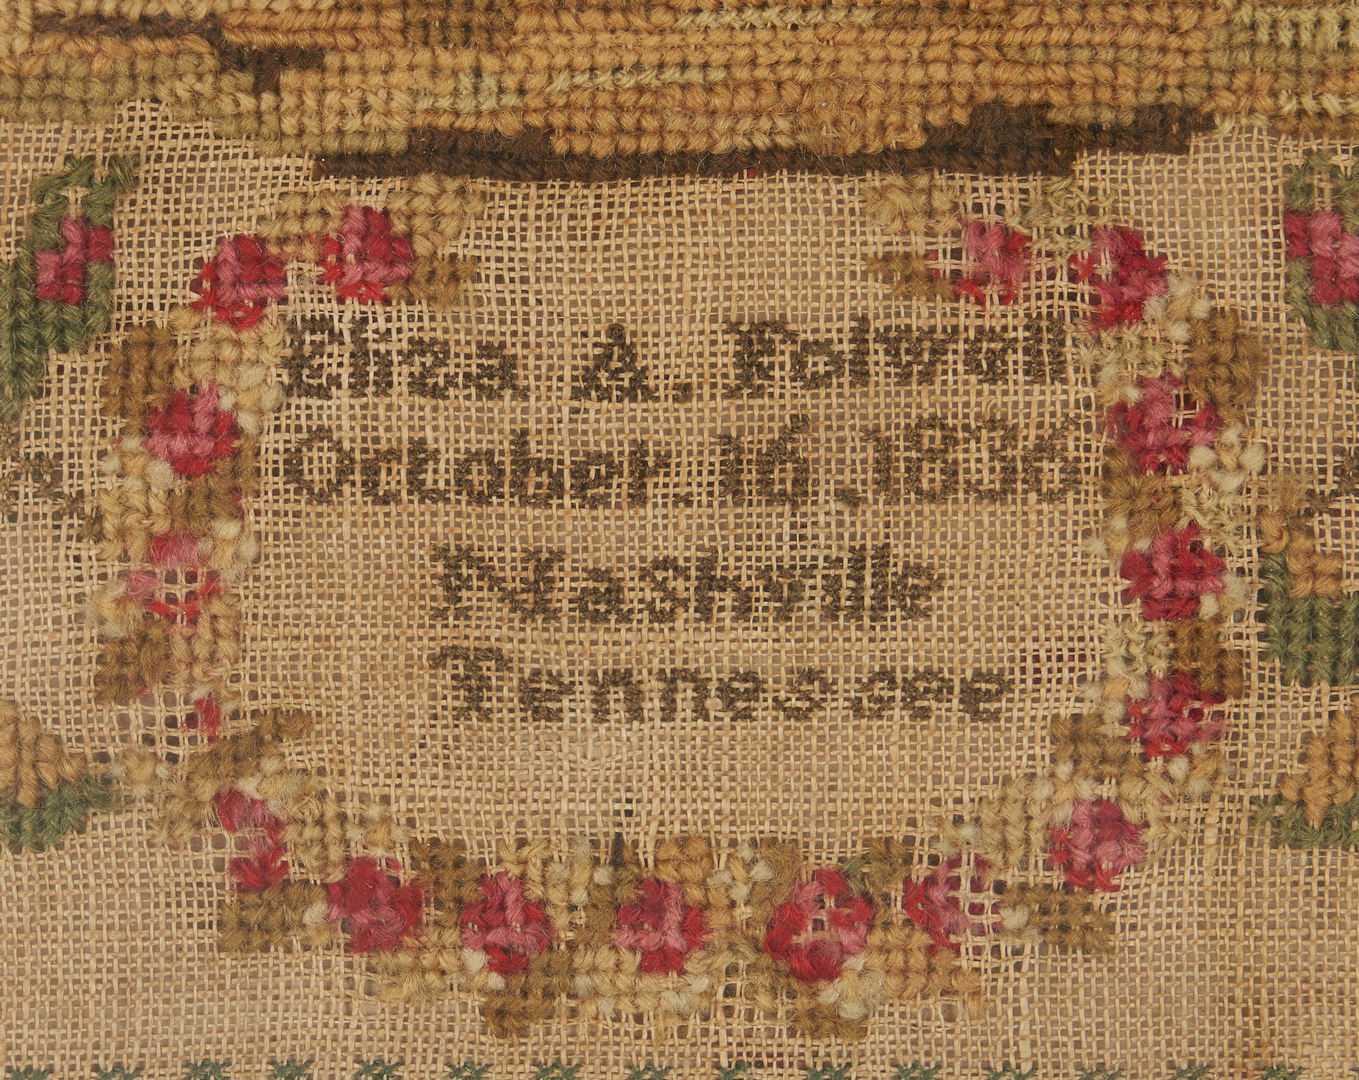 Lot 205: Nashville, Tennessee 1836 Sampler